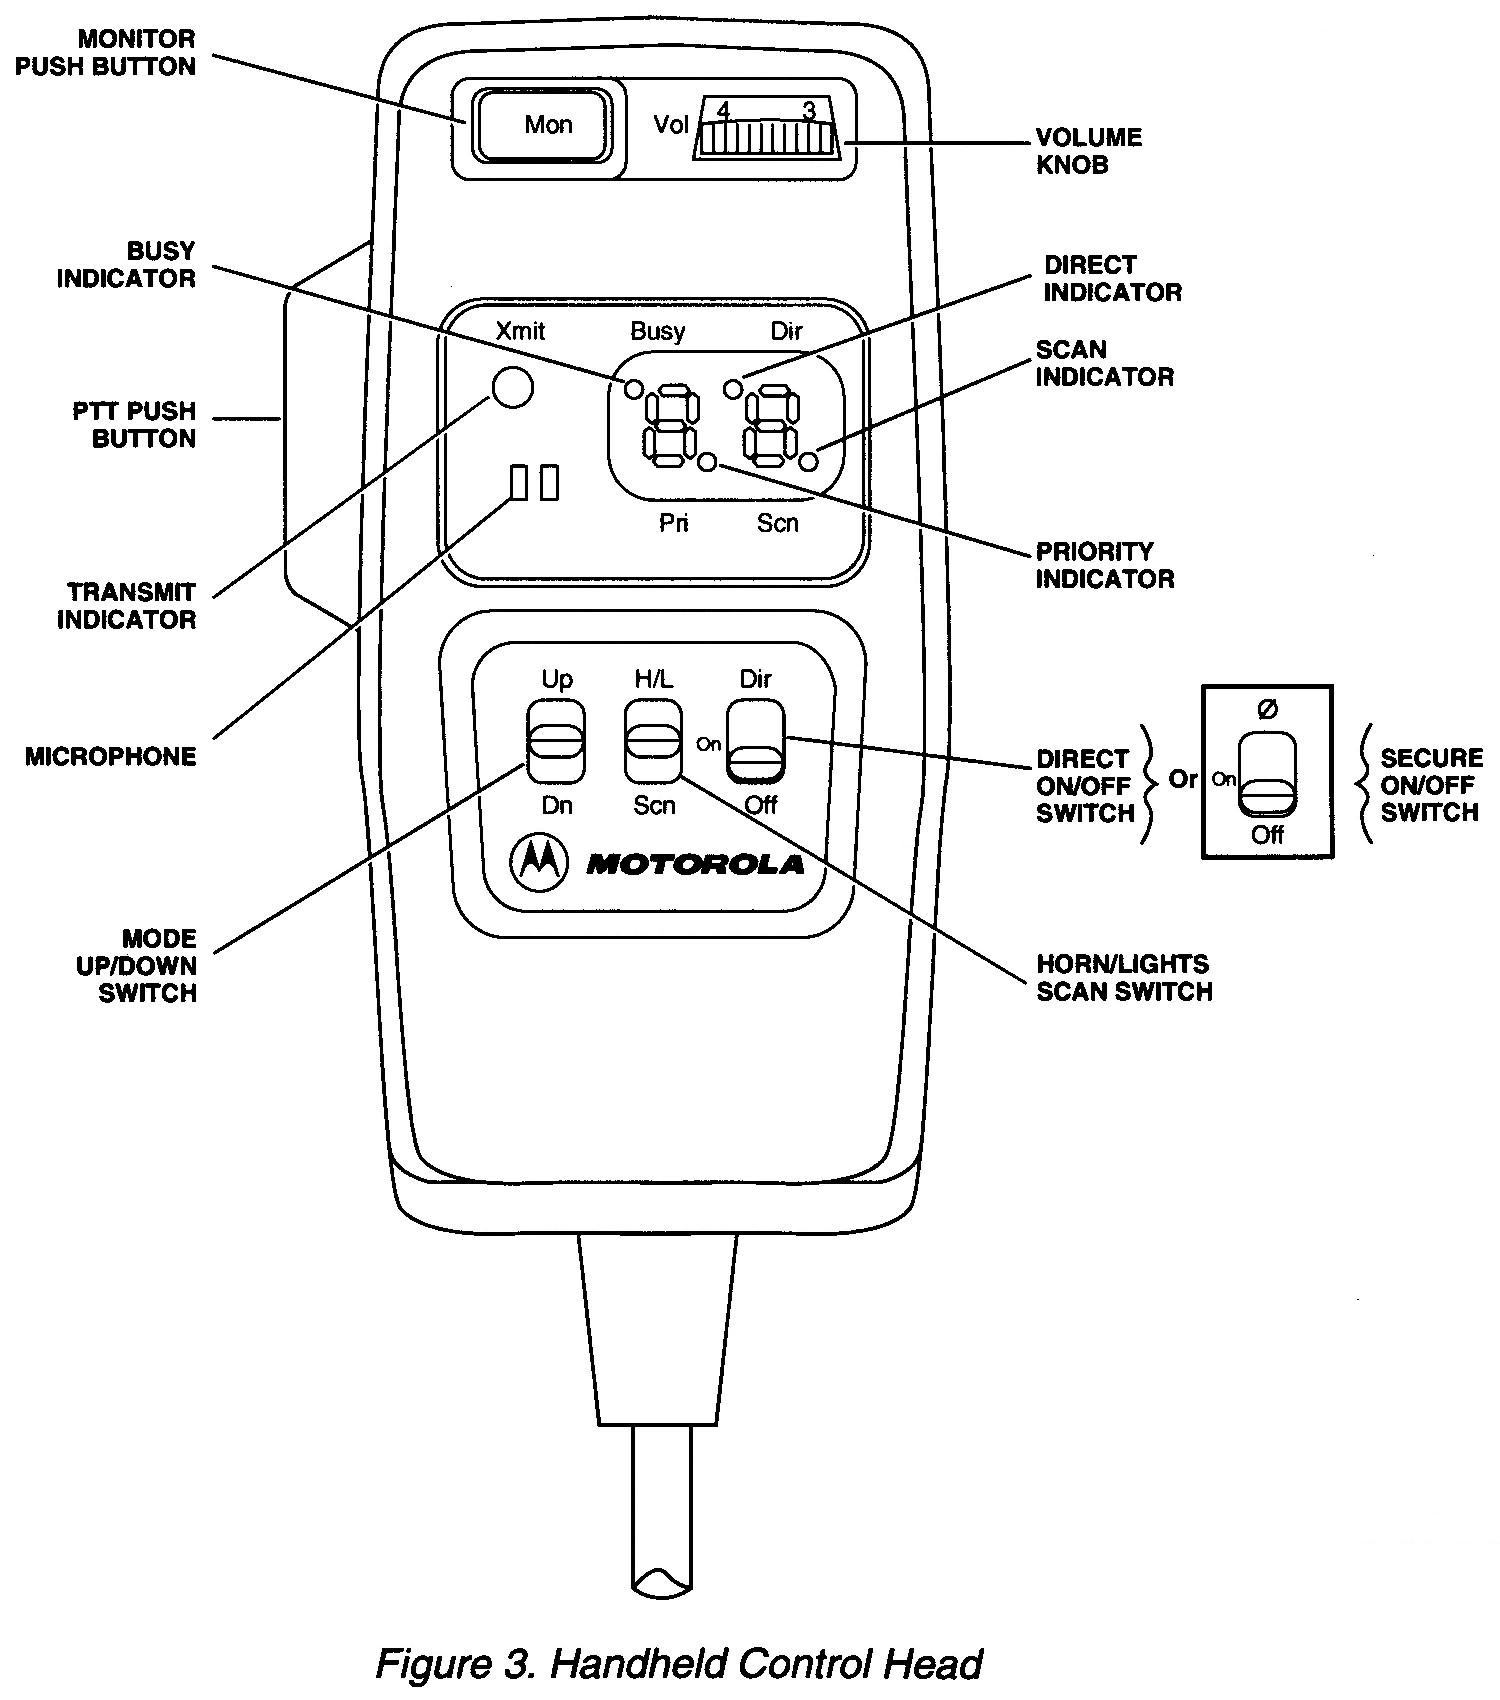 Introduction to Motorola Radio Configurations